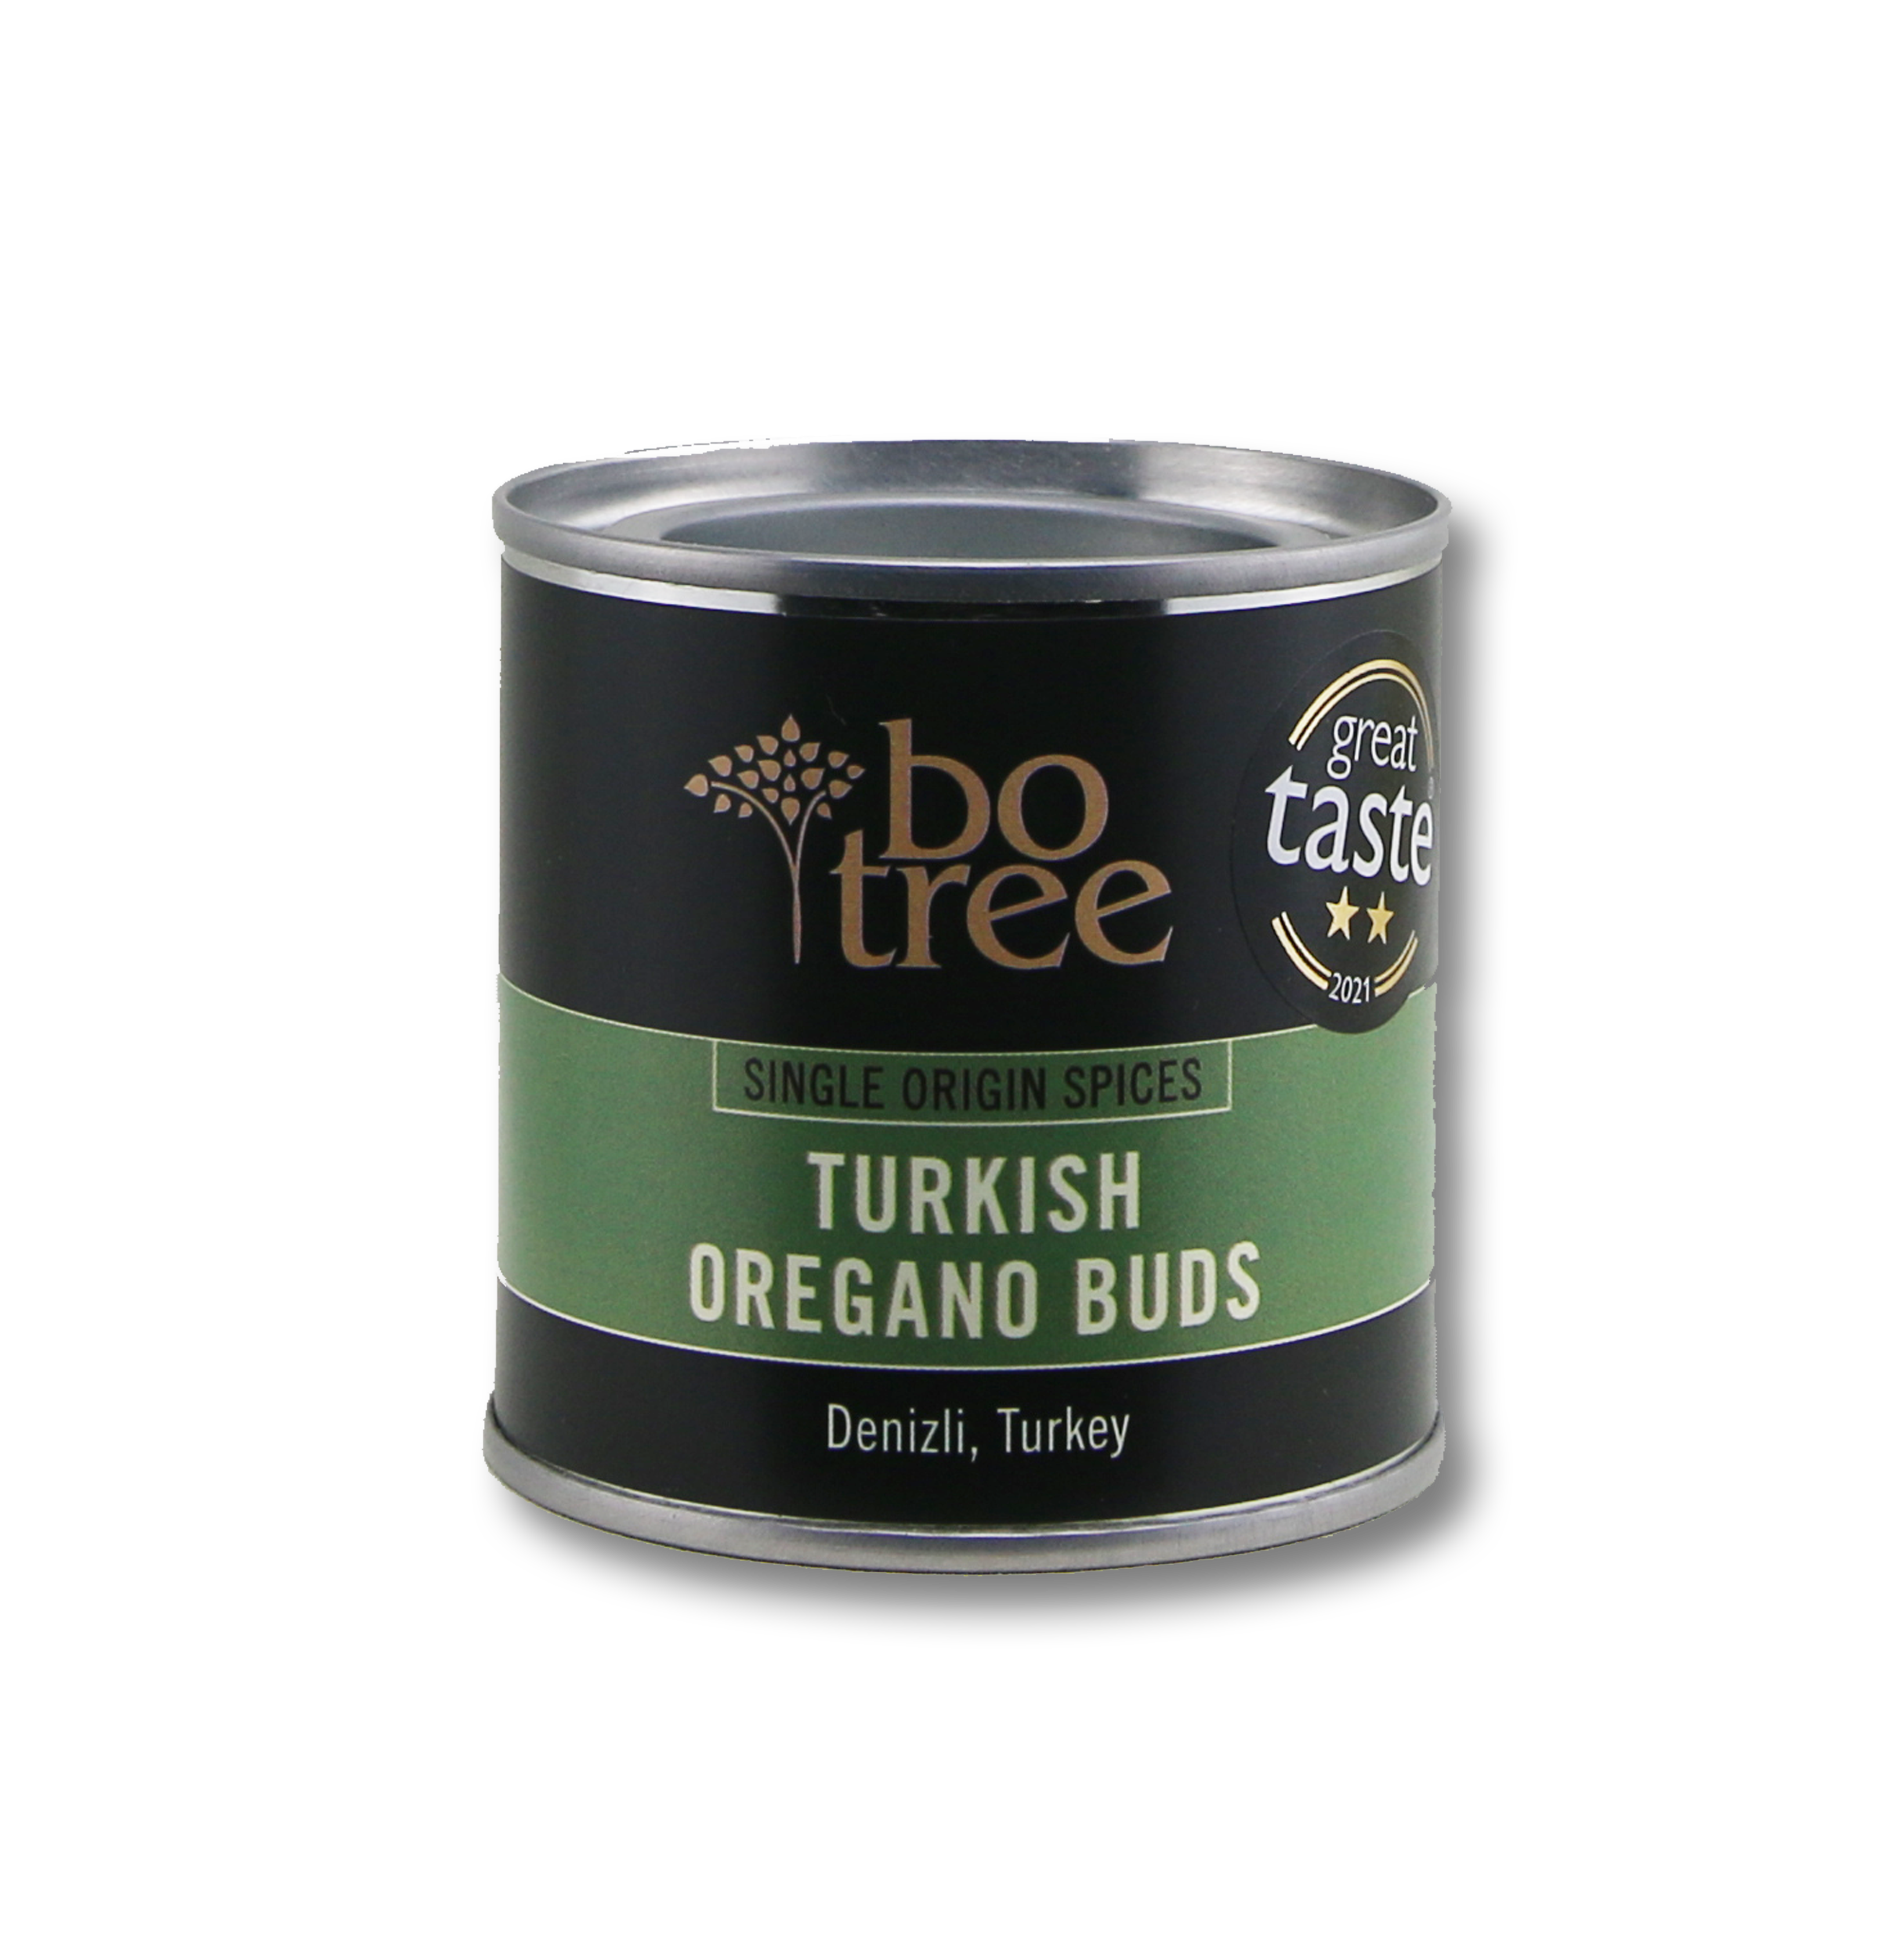 Turkish Oregano Buds